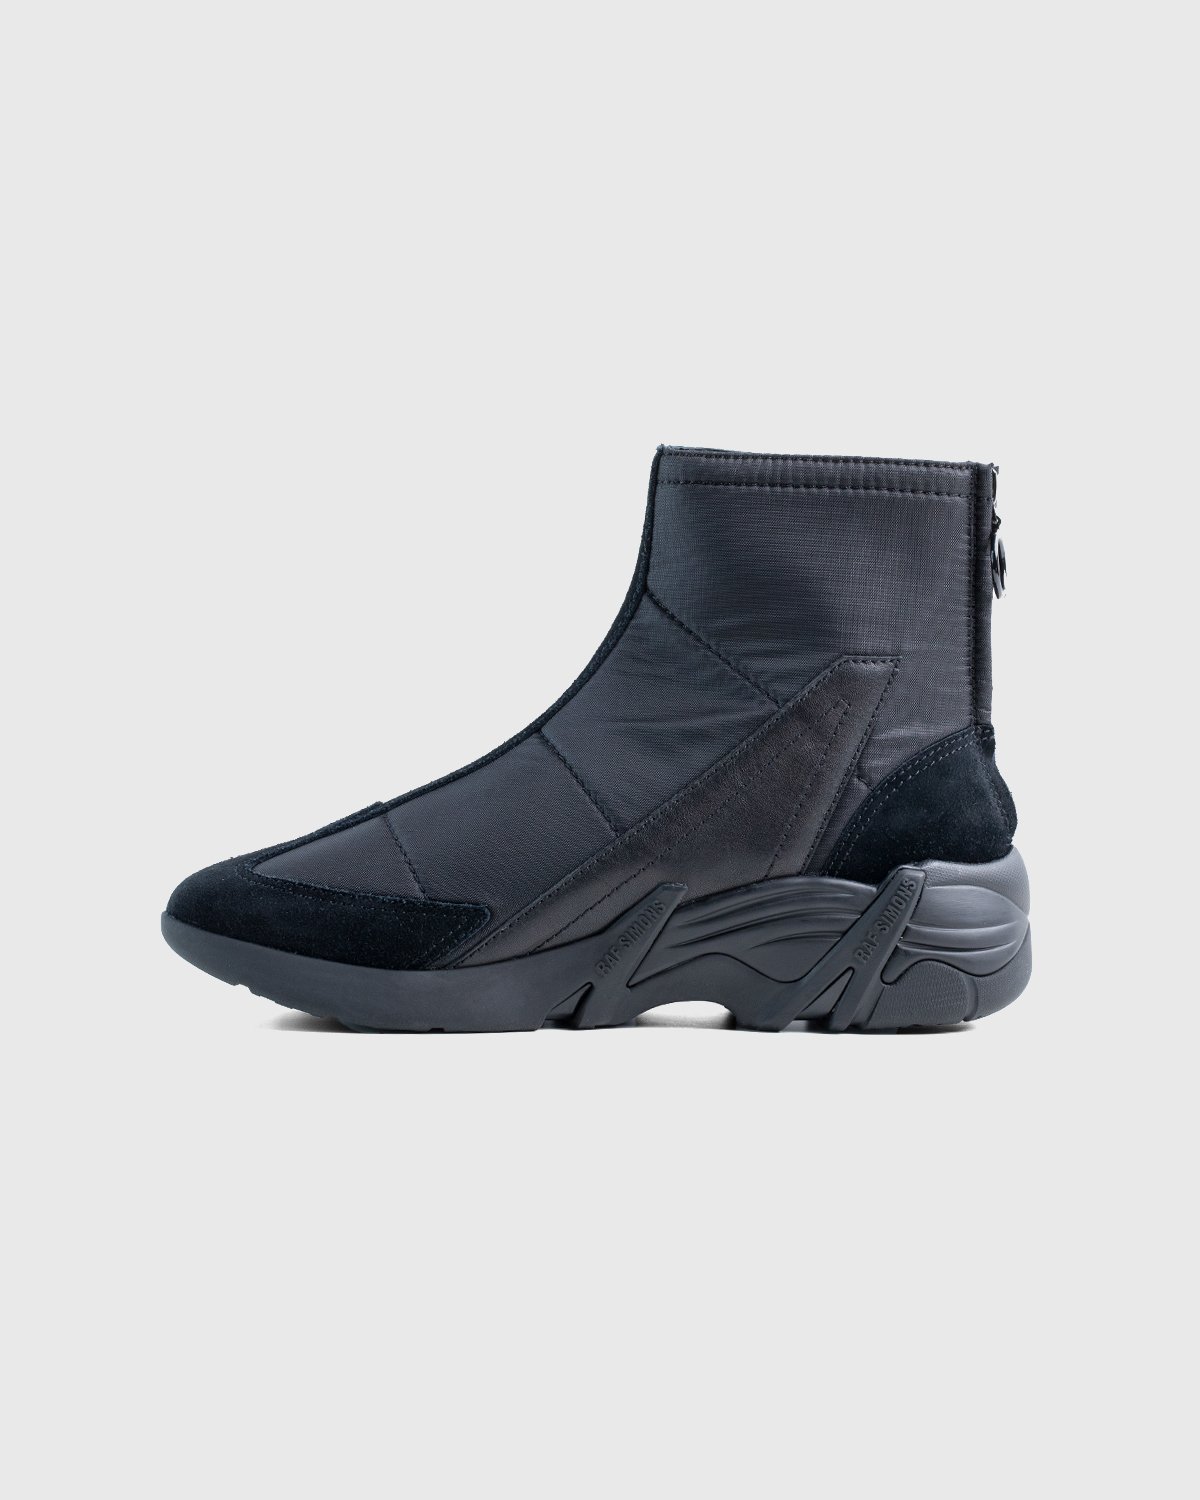 Raf Simons - Cylon 22 Black - Footwear - Black - Image 6